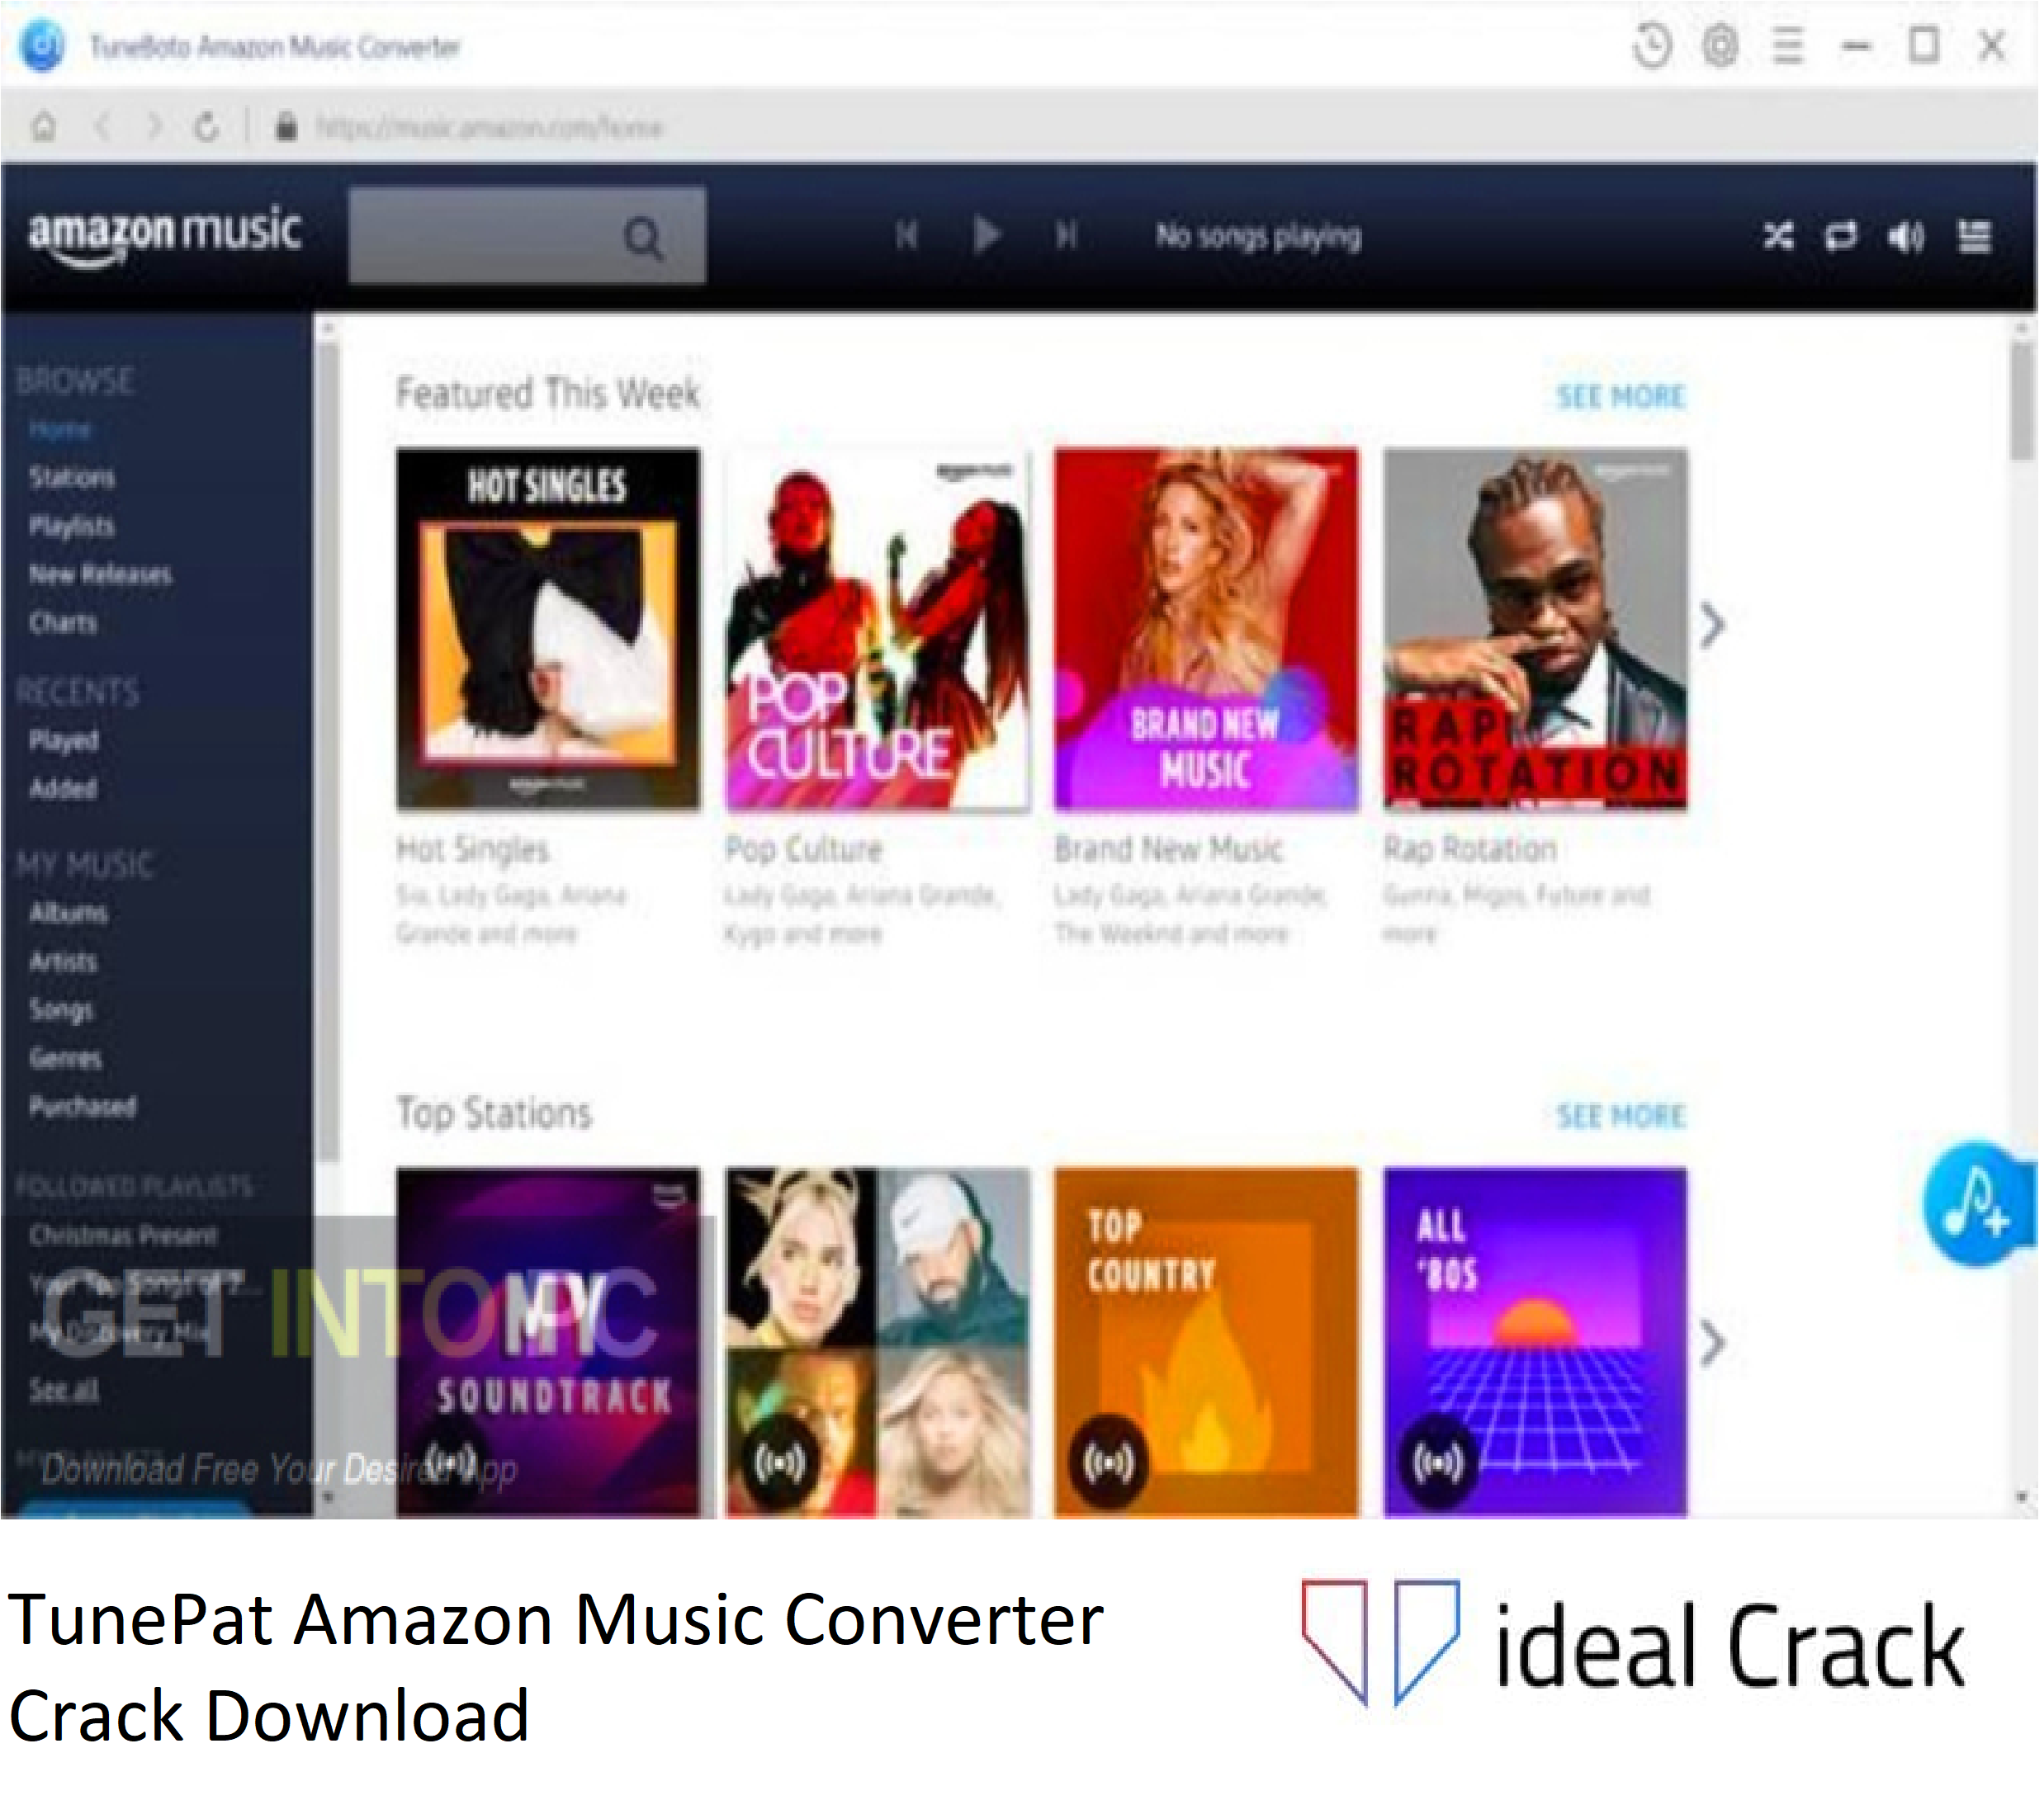 TunePat Amazon Music Converter Crack Download